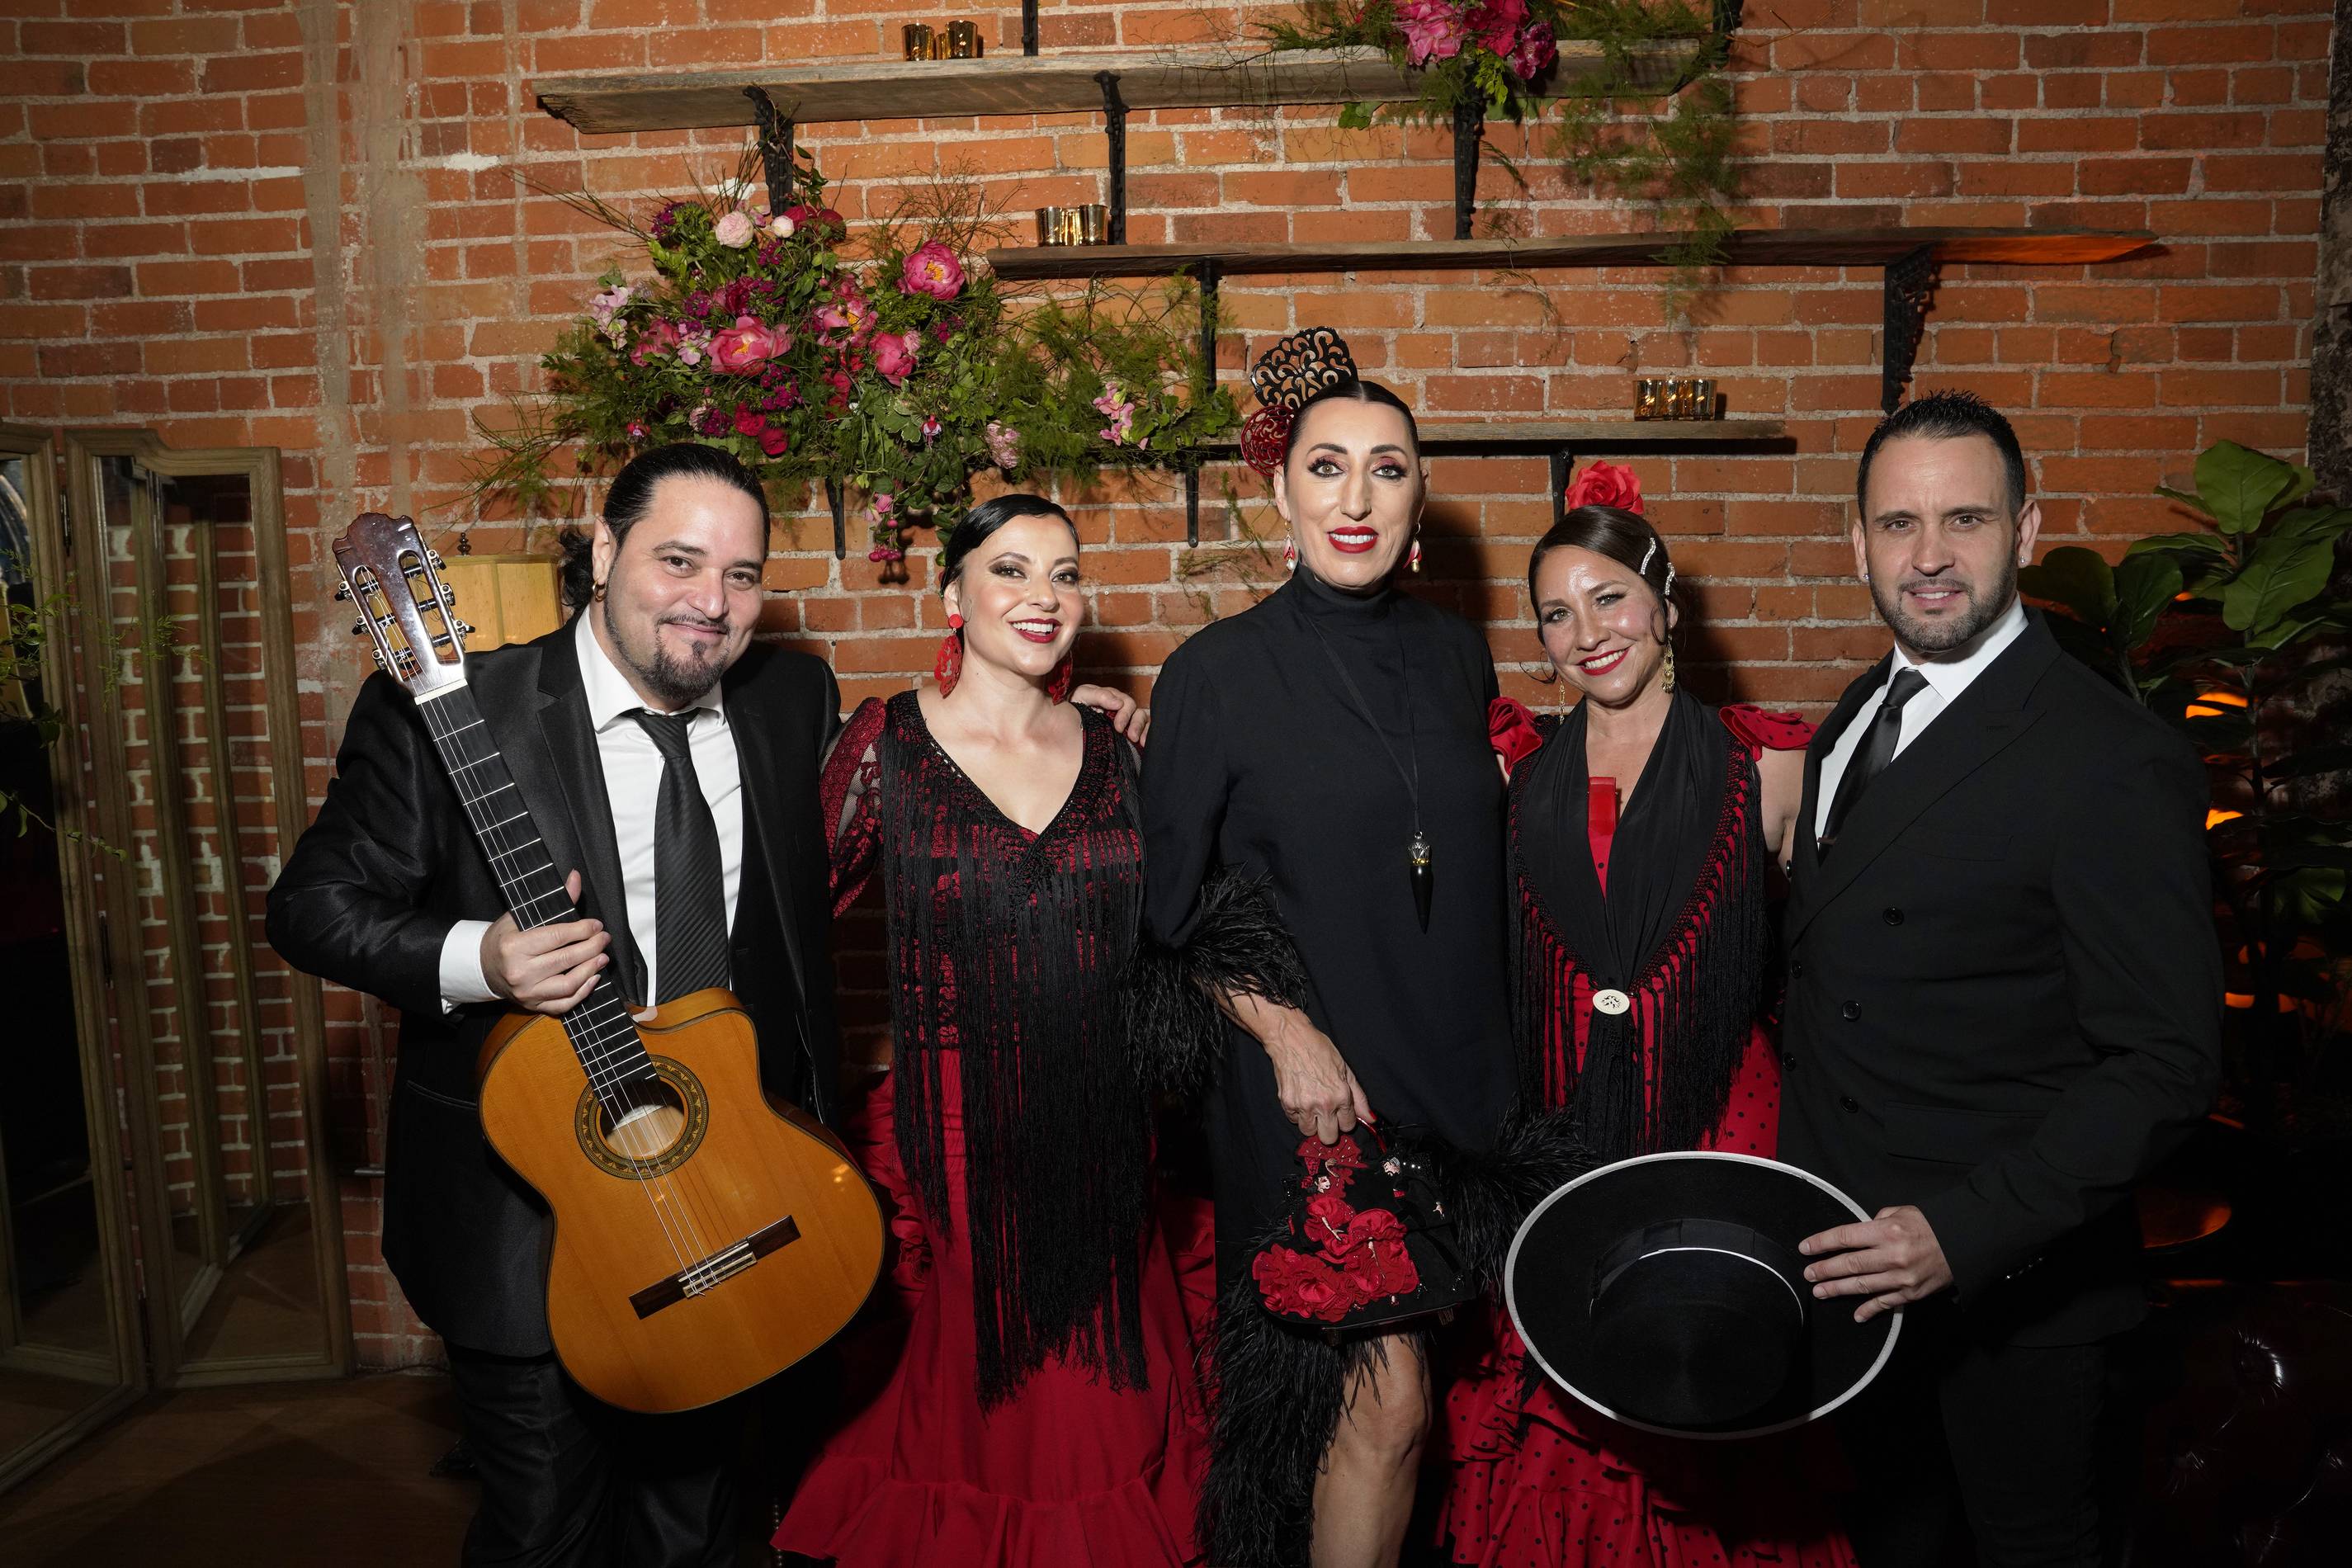 Christian Louboutin and Rossy de Palma Celebrate Flamencaba Collection – WWD